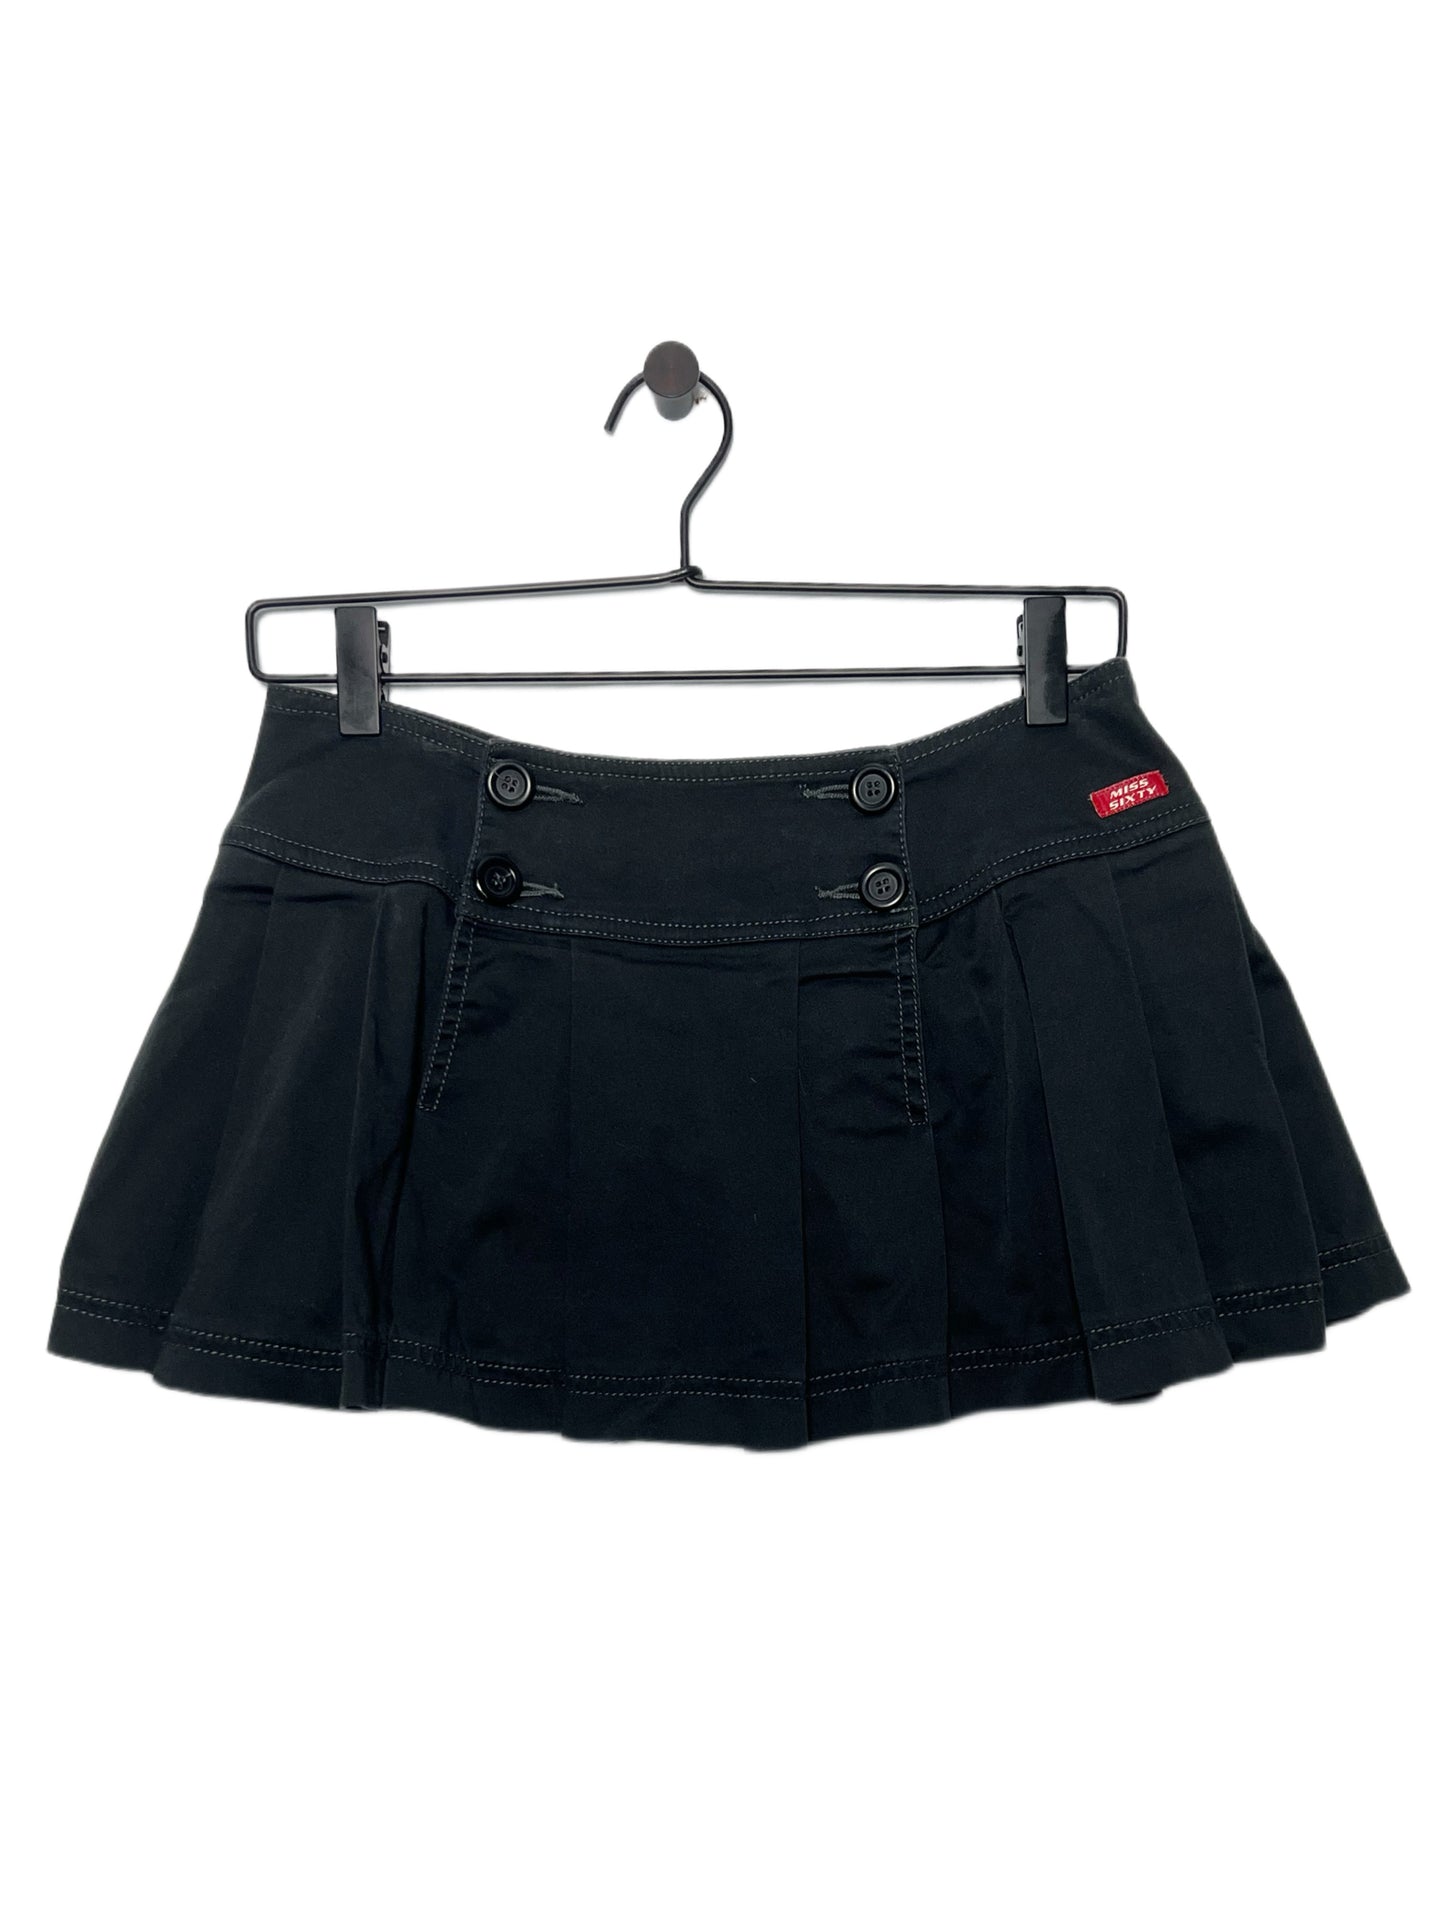 Miss Sixty Black Pleated Mini Skirt